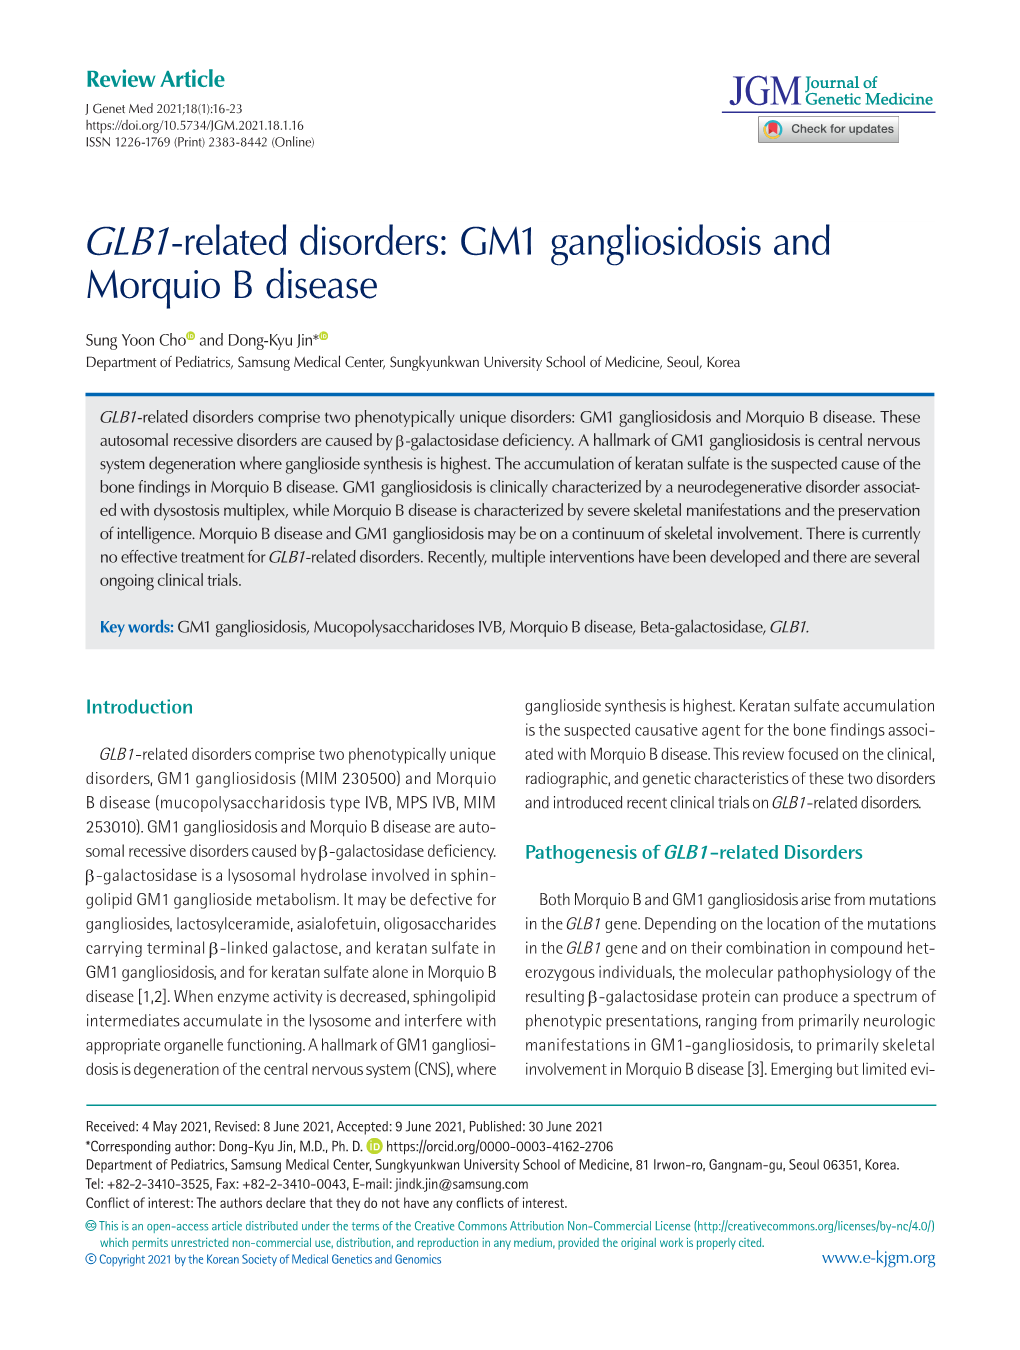 GM1 Gangliosidosis and Morquio B Disease